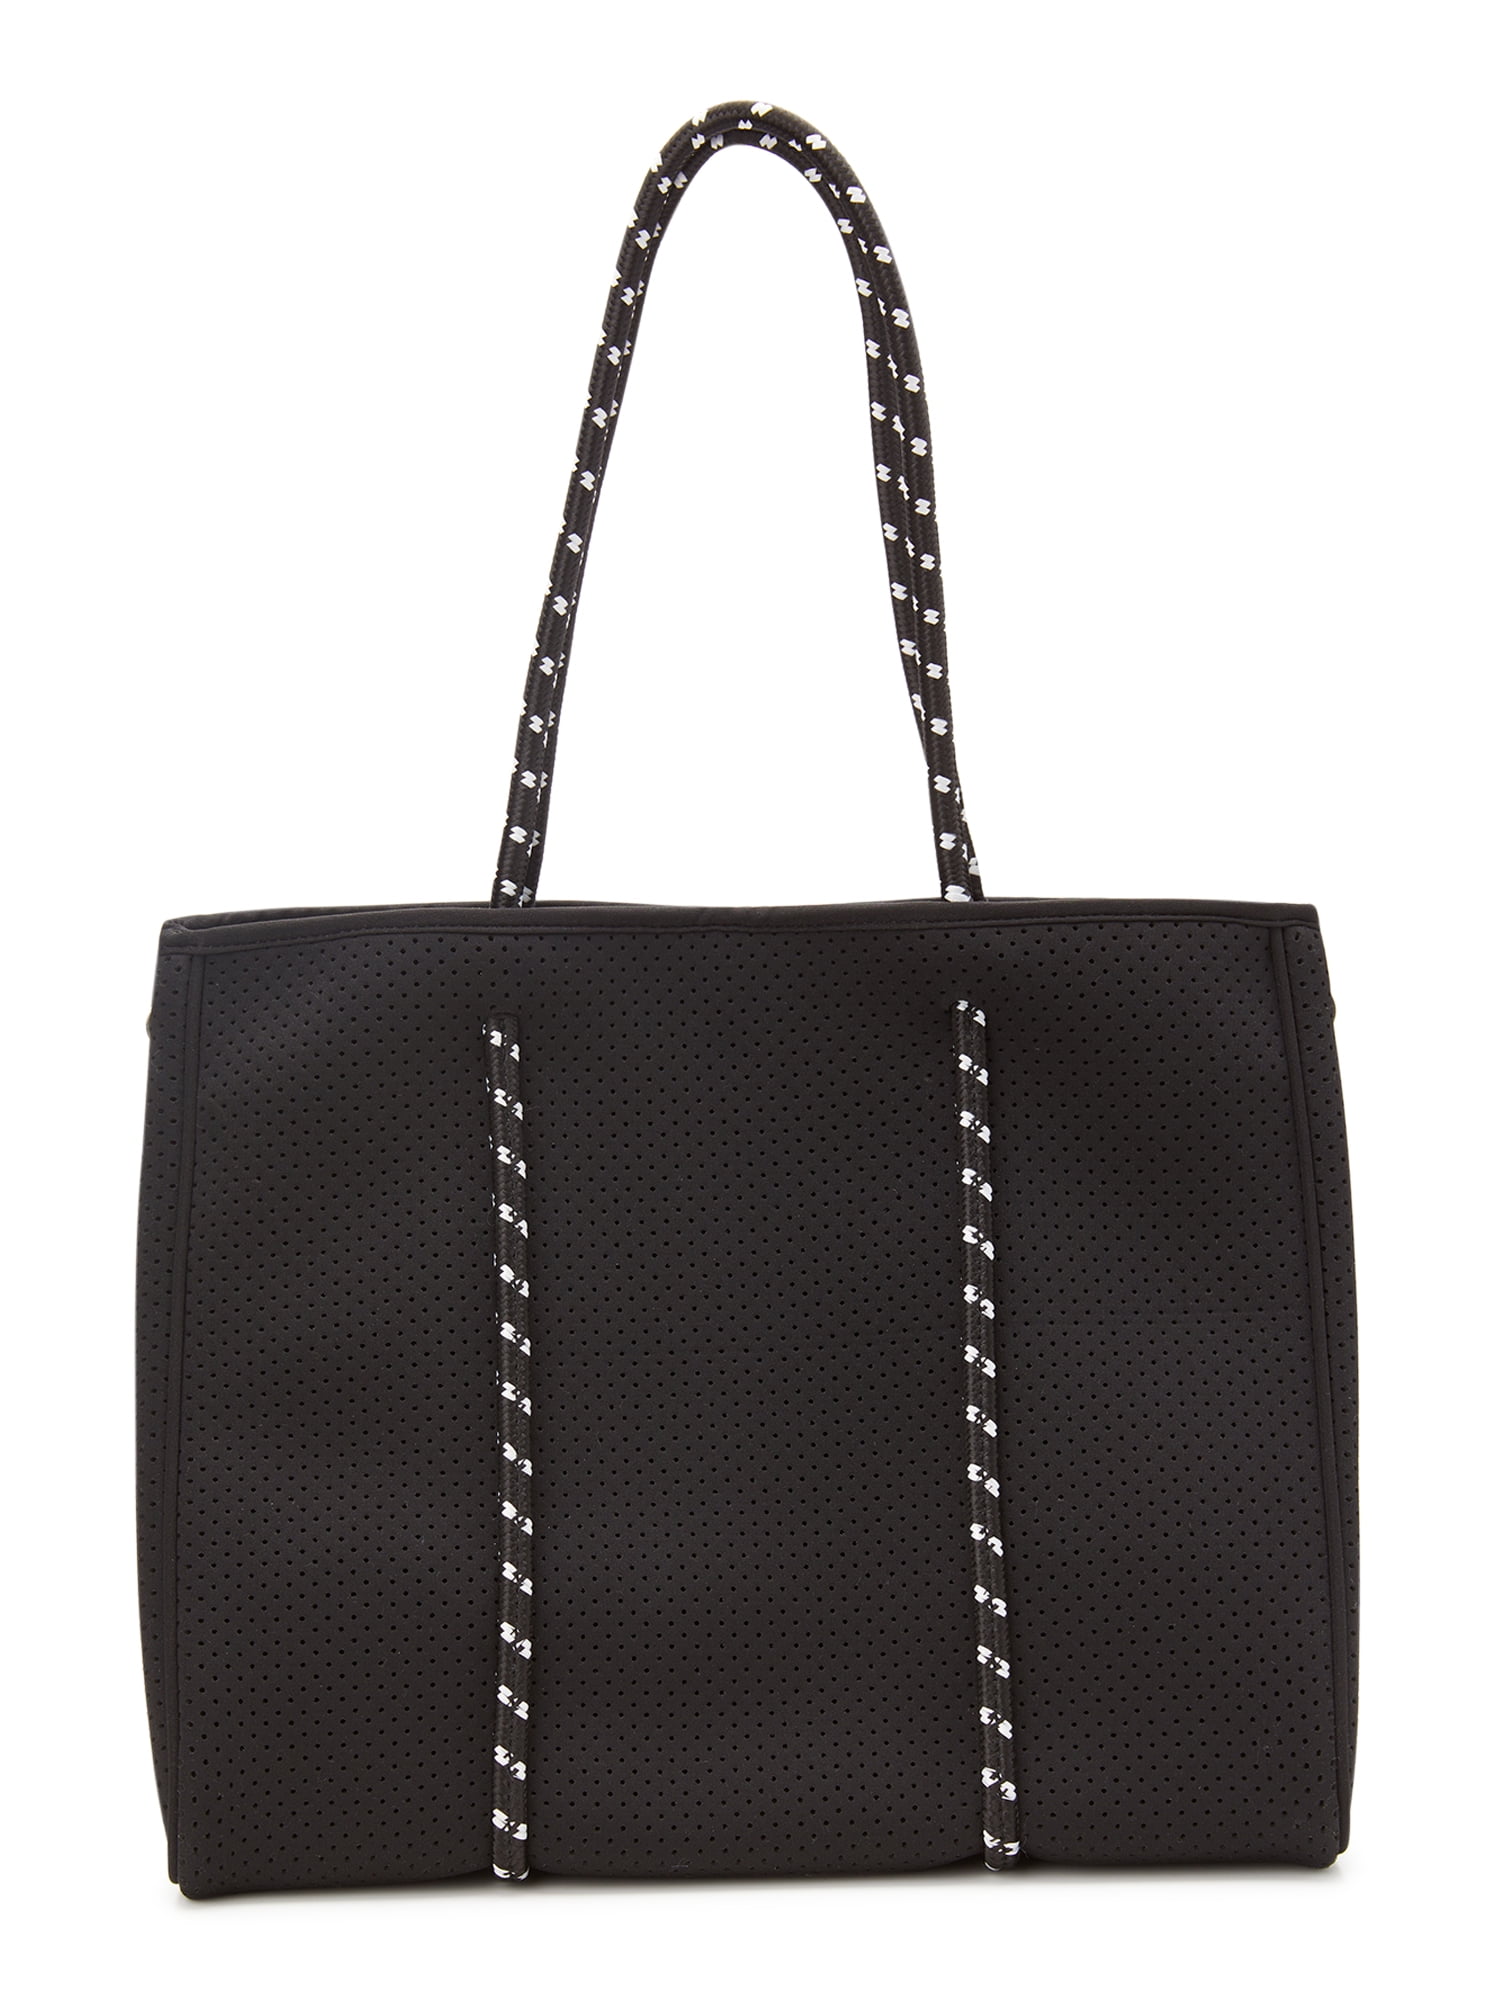 No Boundaries Women's 2-Piece Neoprene Beach Tote Handbag with Removable  Zipper Pouch, Black